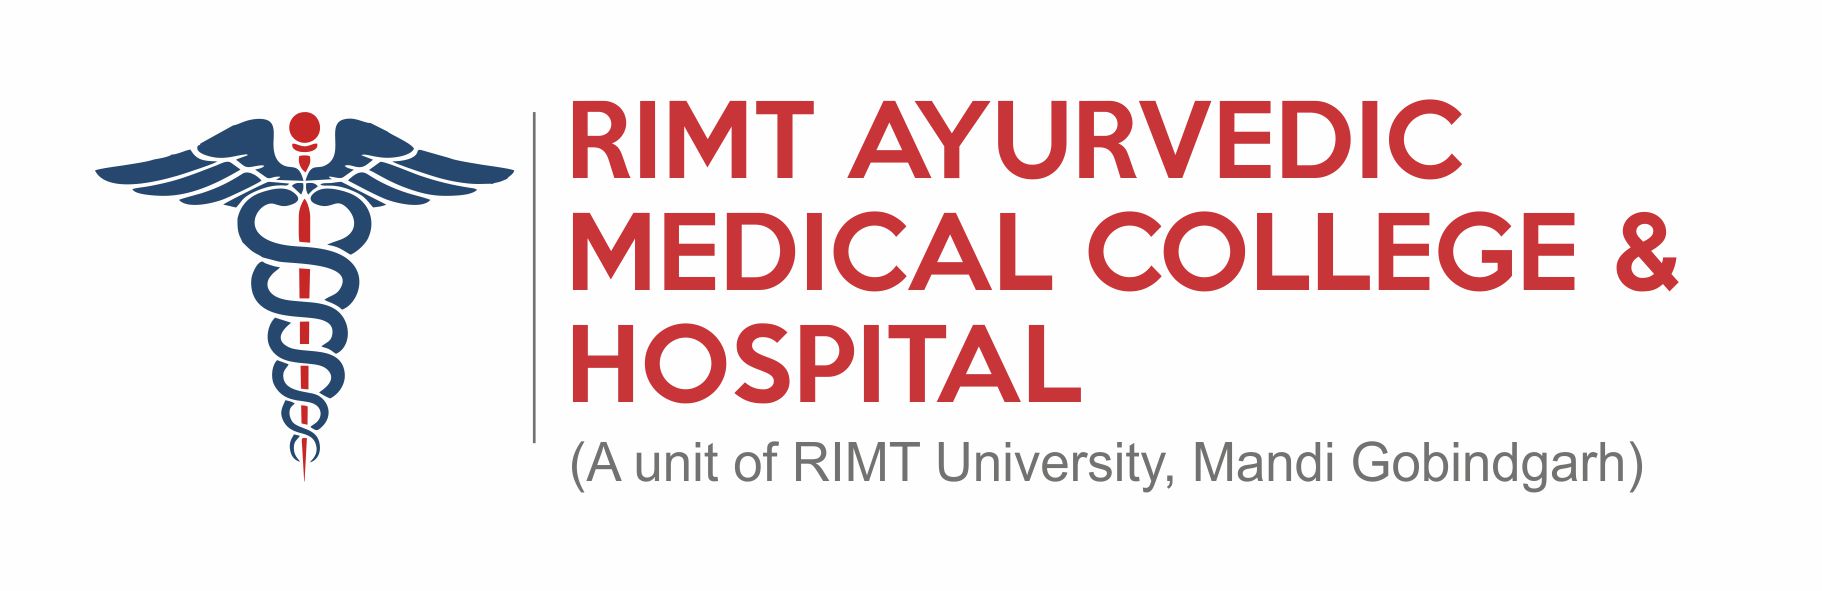 RIMT Ayurvedic Medical College & Hospital